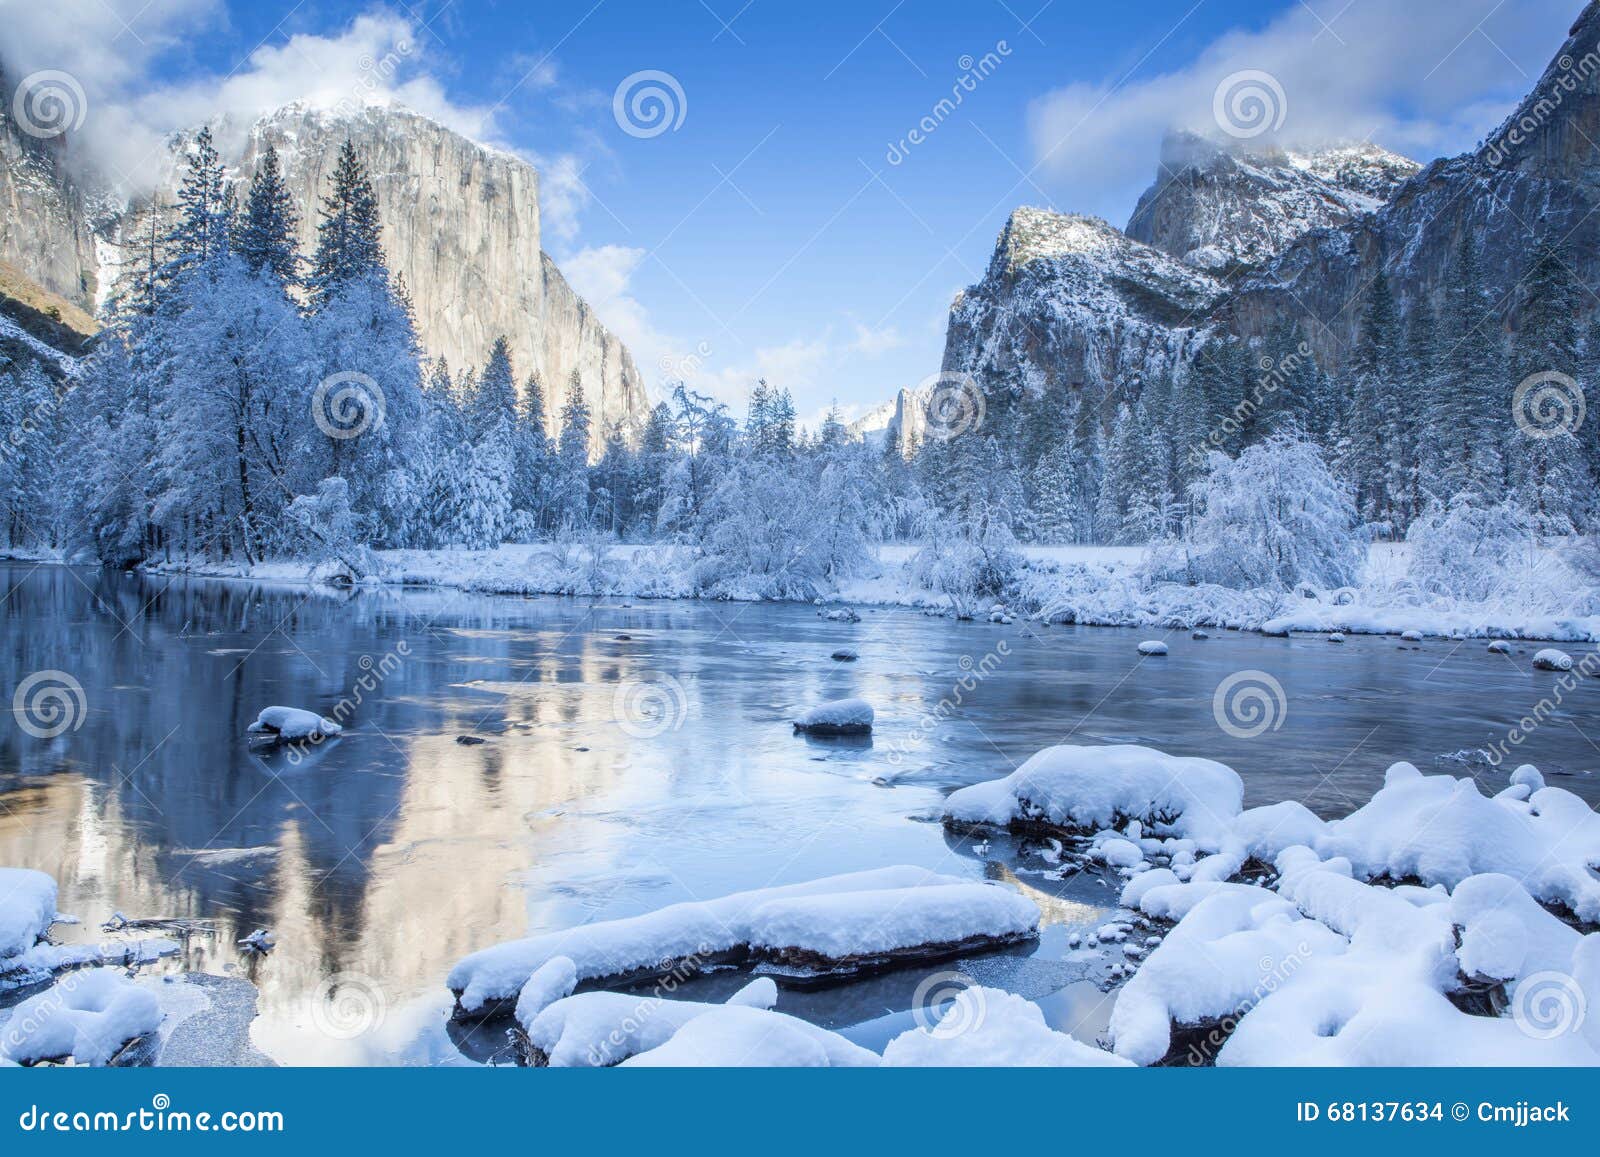 yosemite valley merced river. serene winter scene